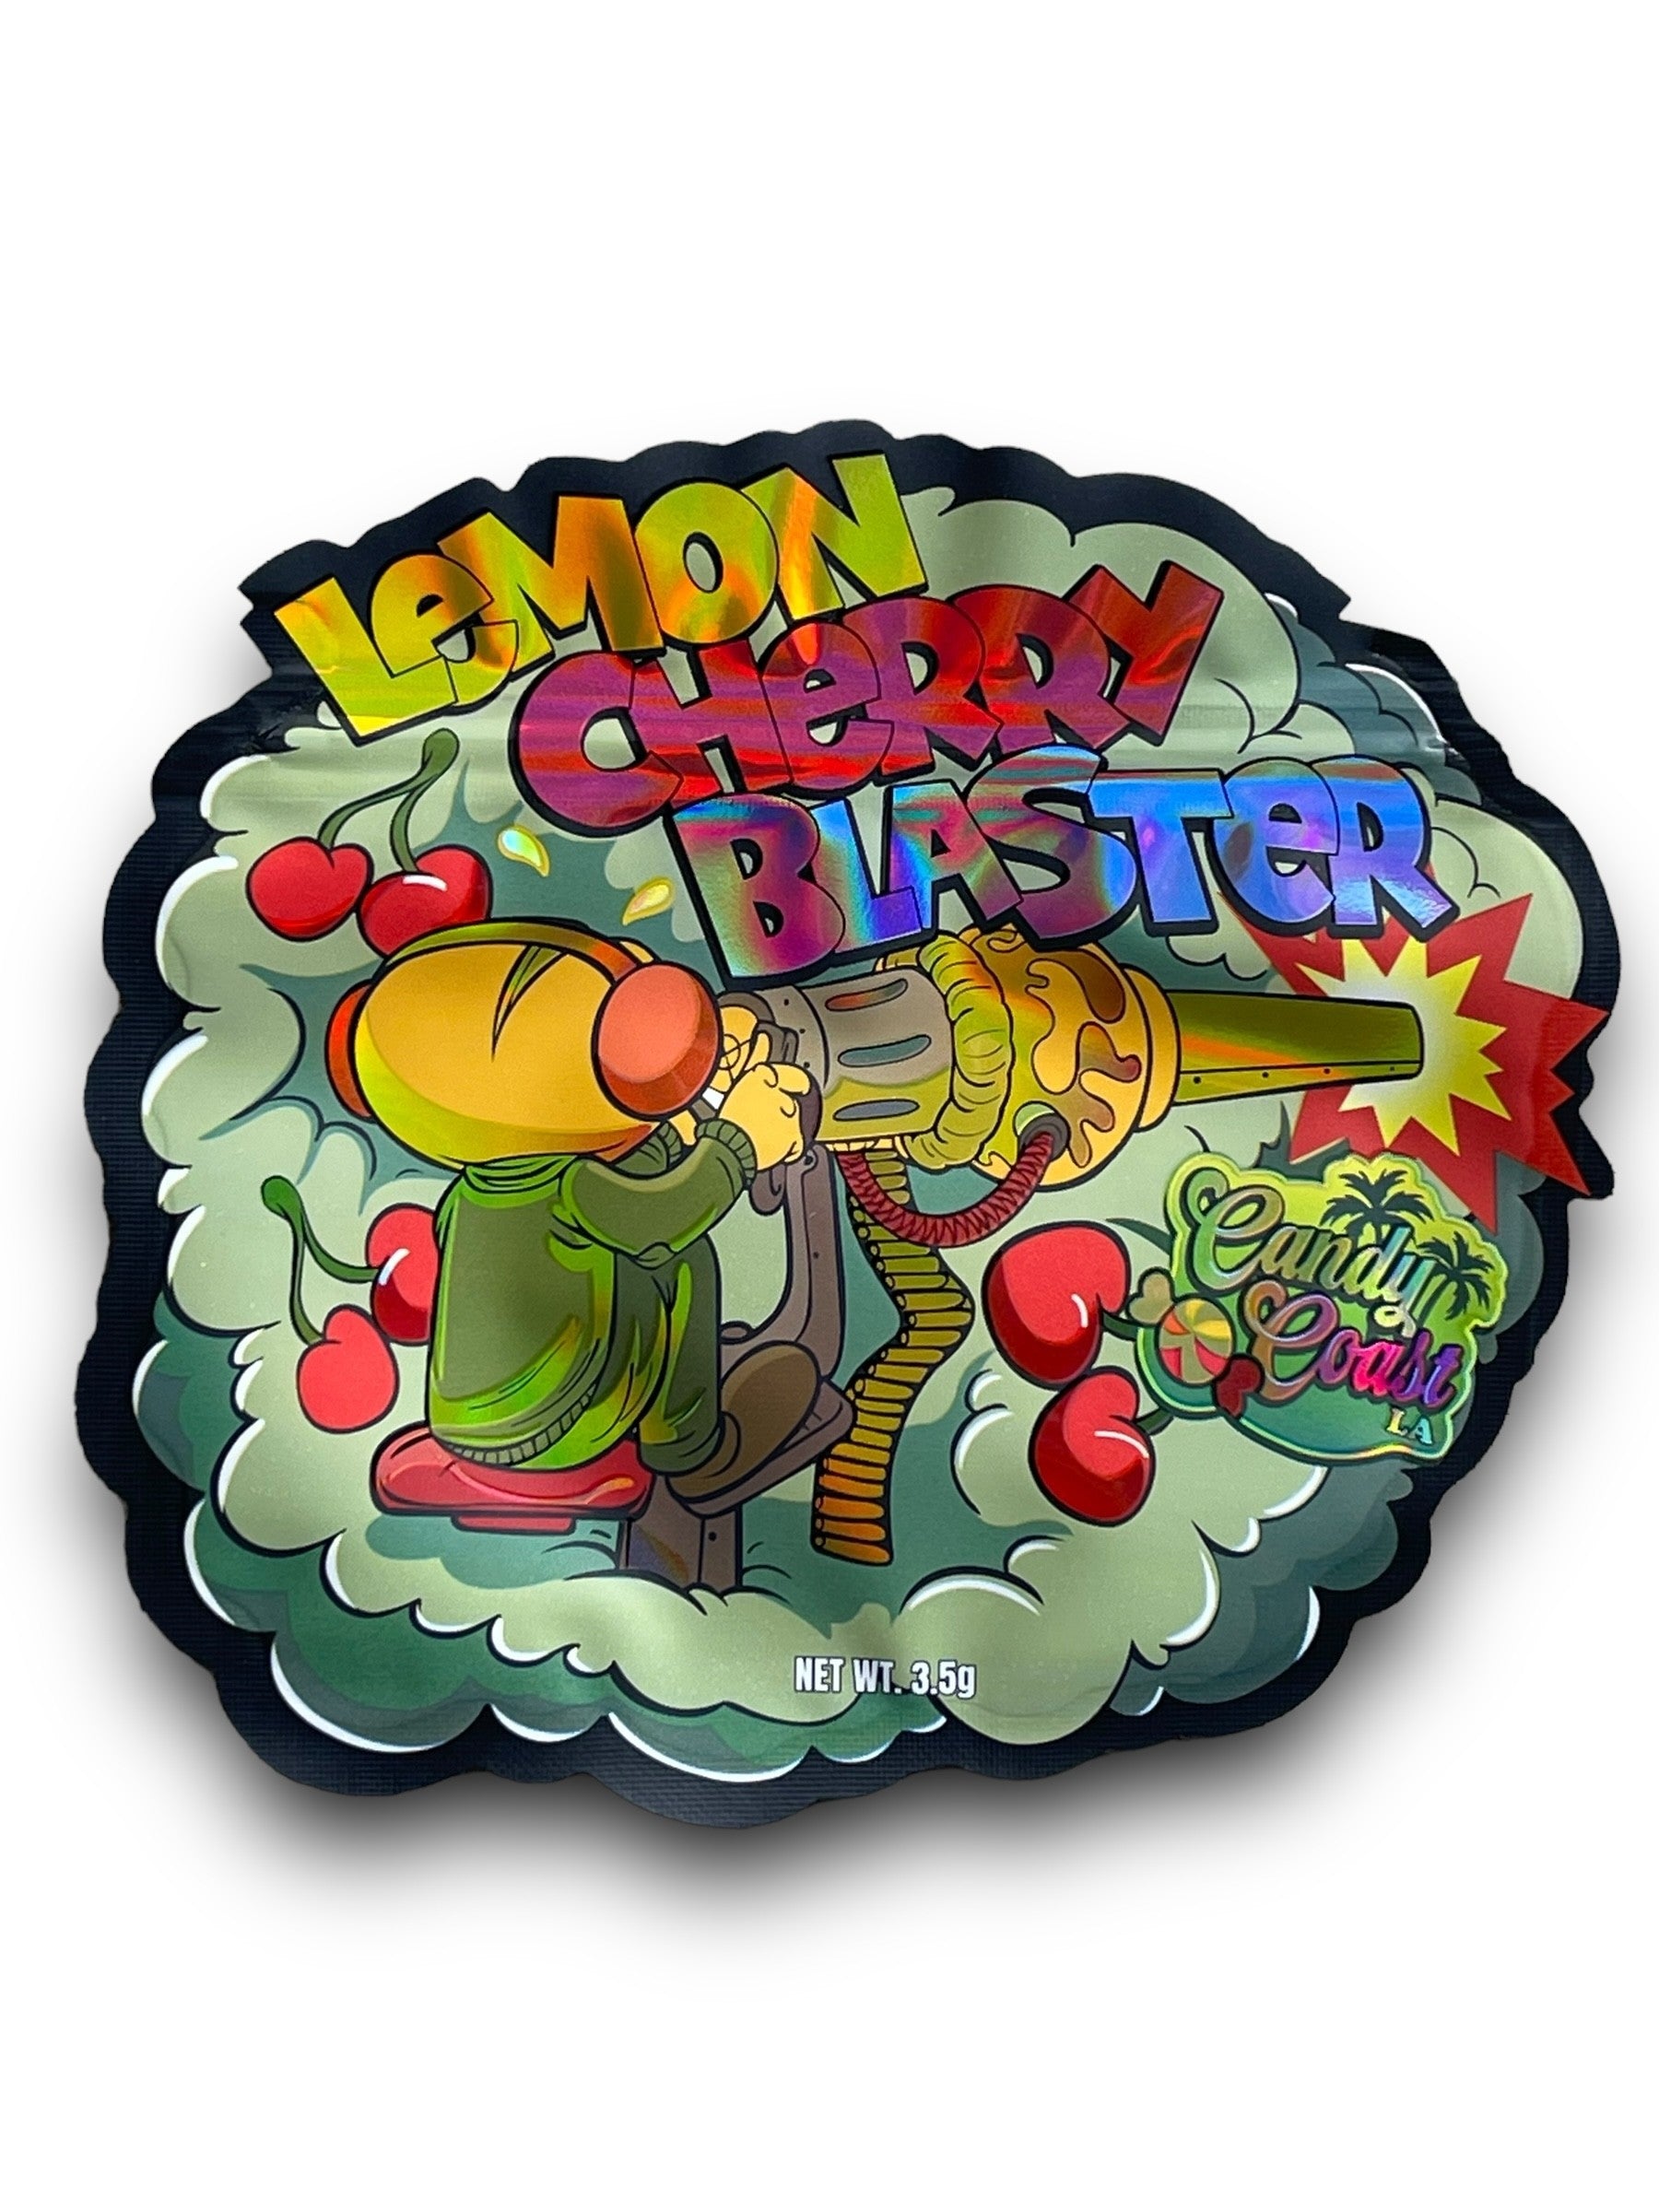 Lemon Cherry Blaster 3.5G Mylar Bags Candy Coast LA-Holographic cut out